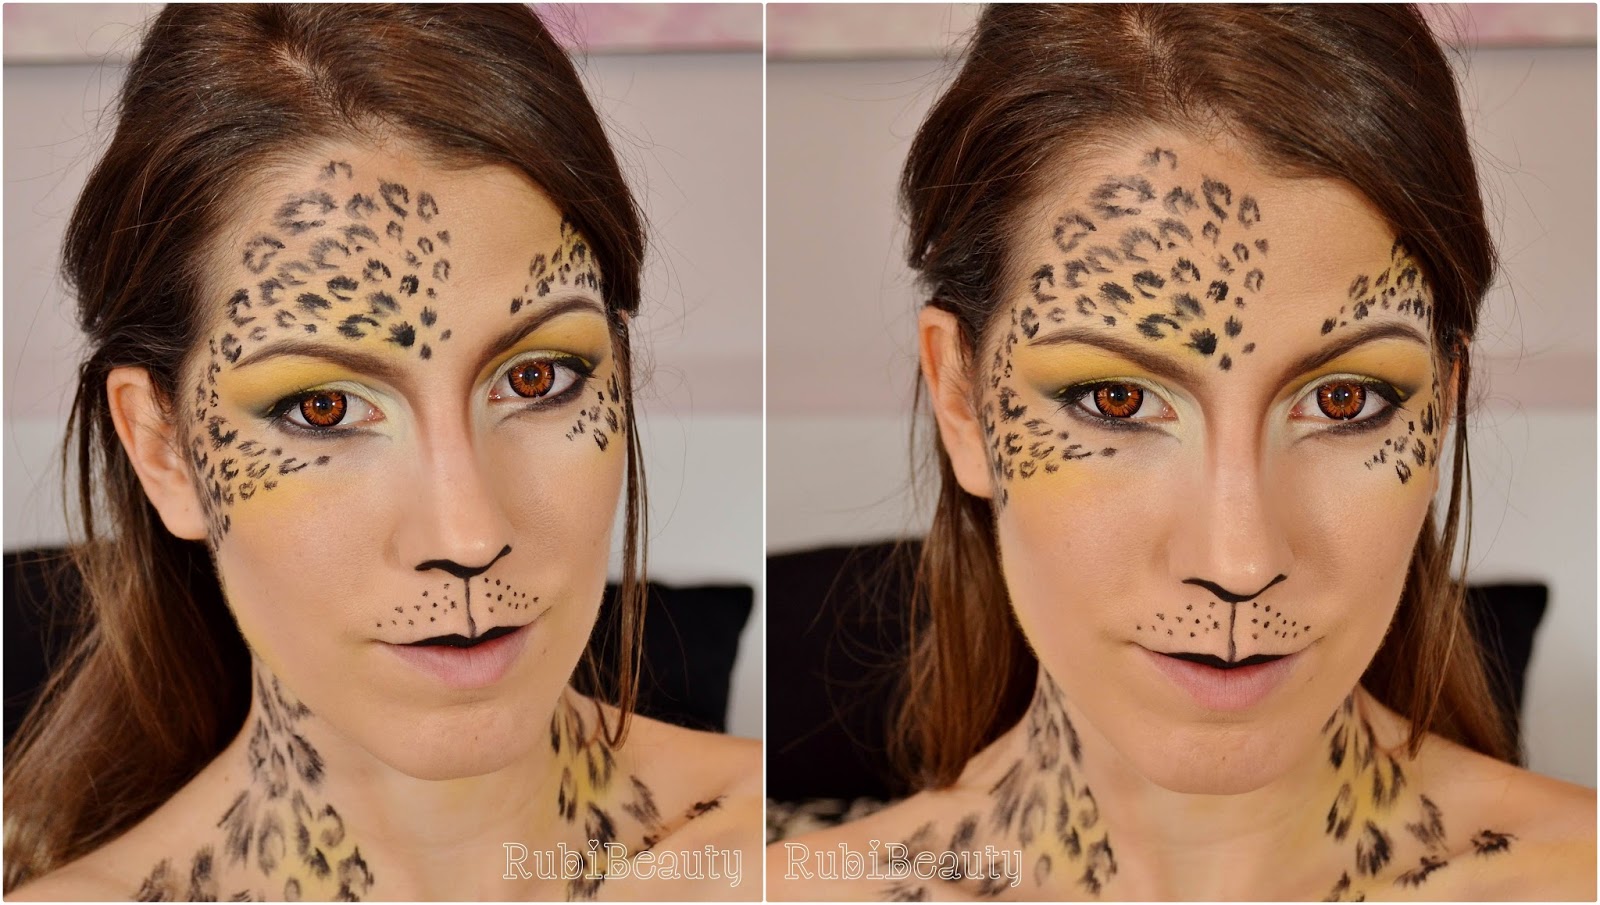 rubibeauty facepaint tutorial maquillaje makeup animal print leopard leopardo